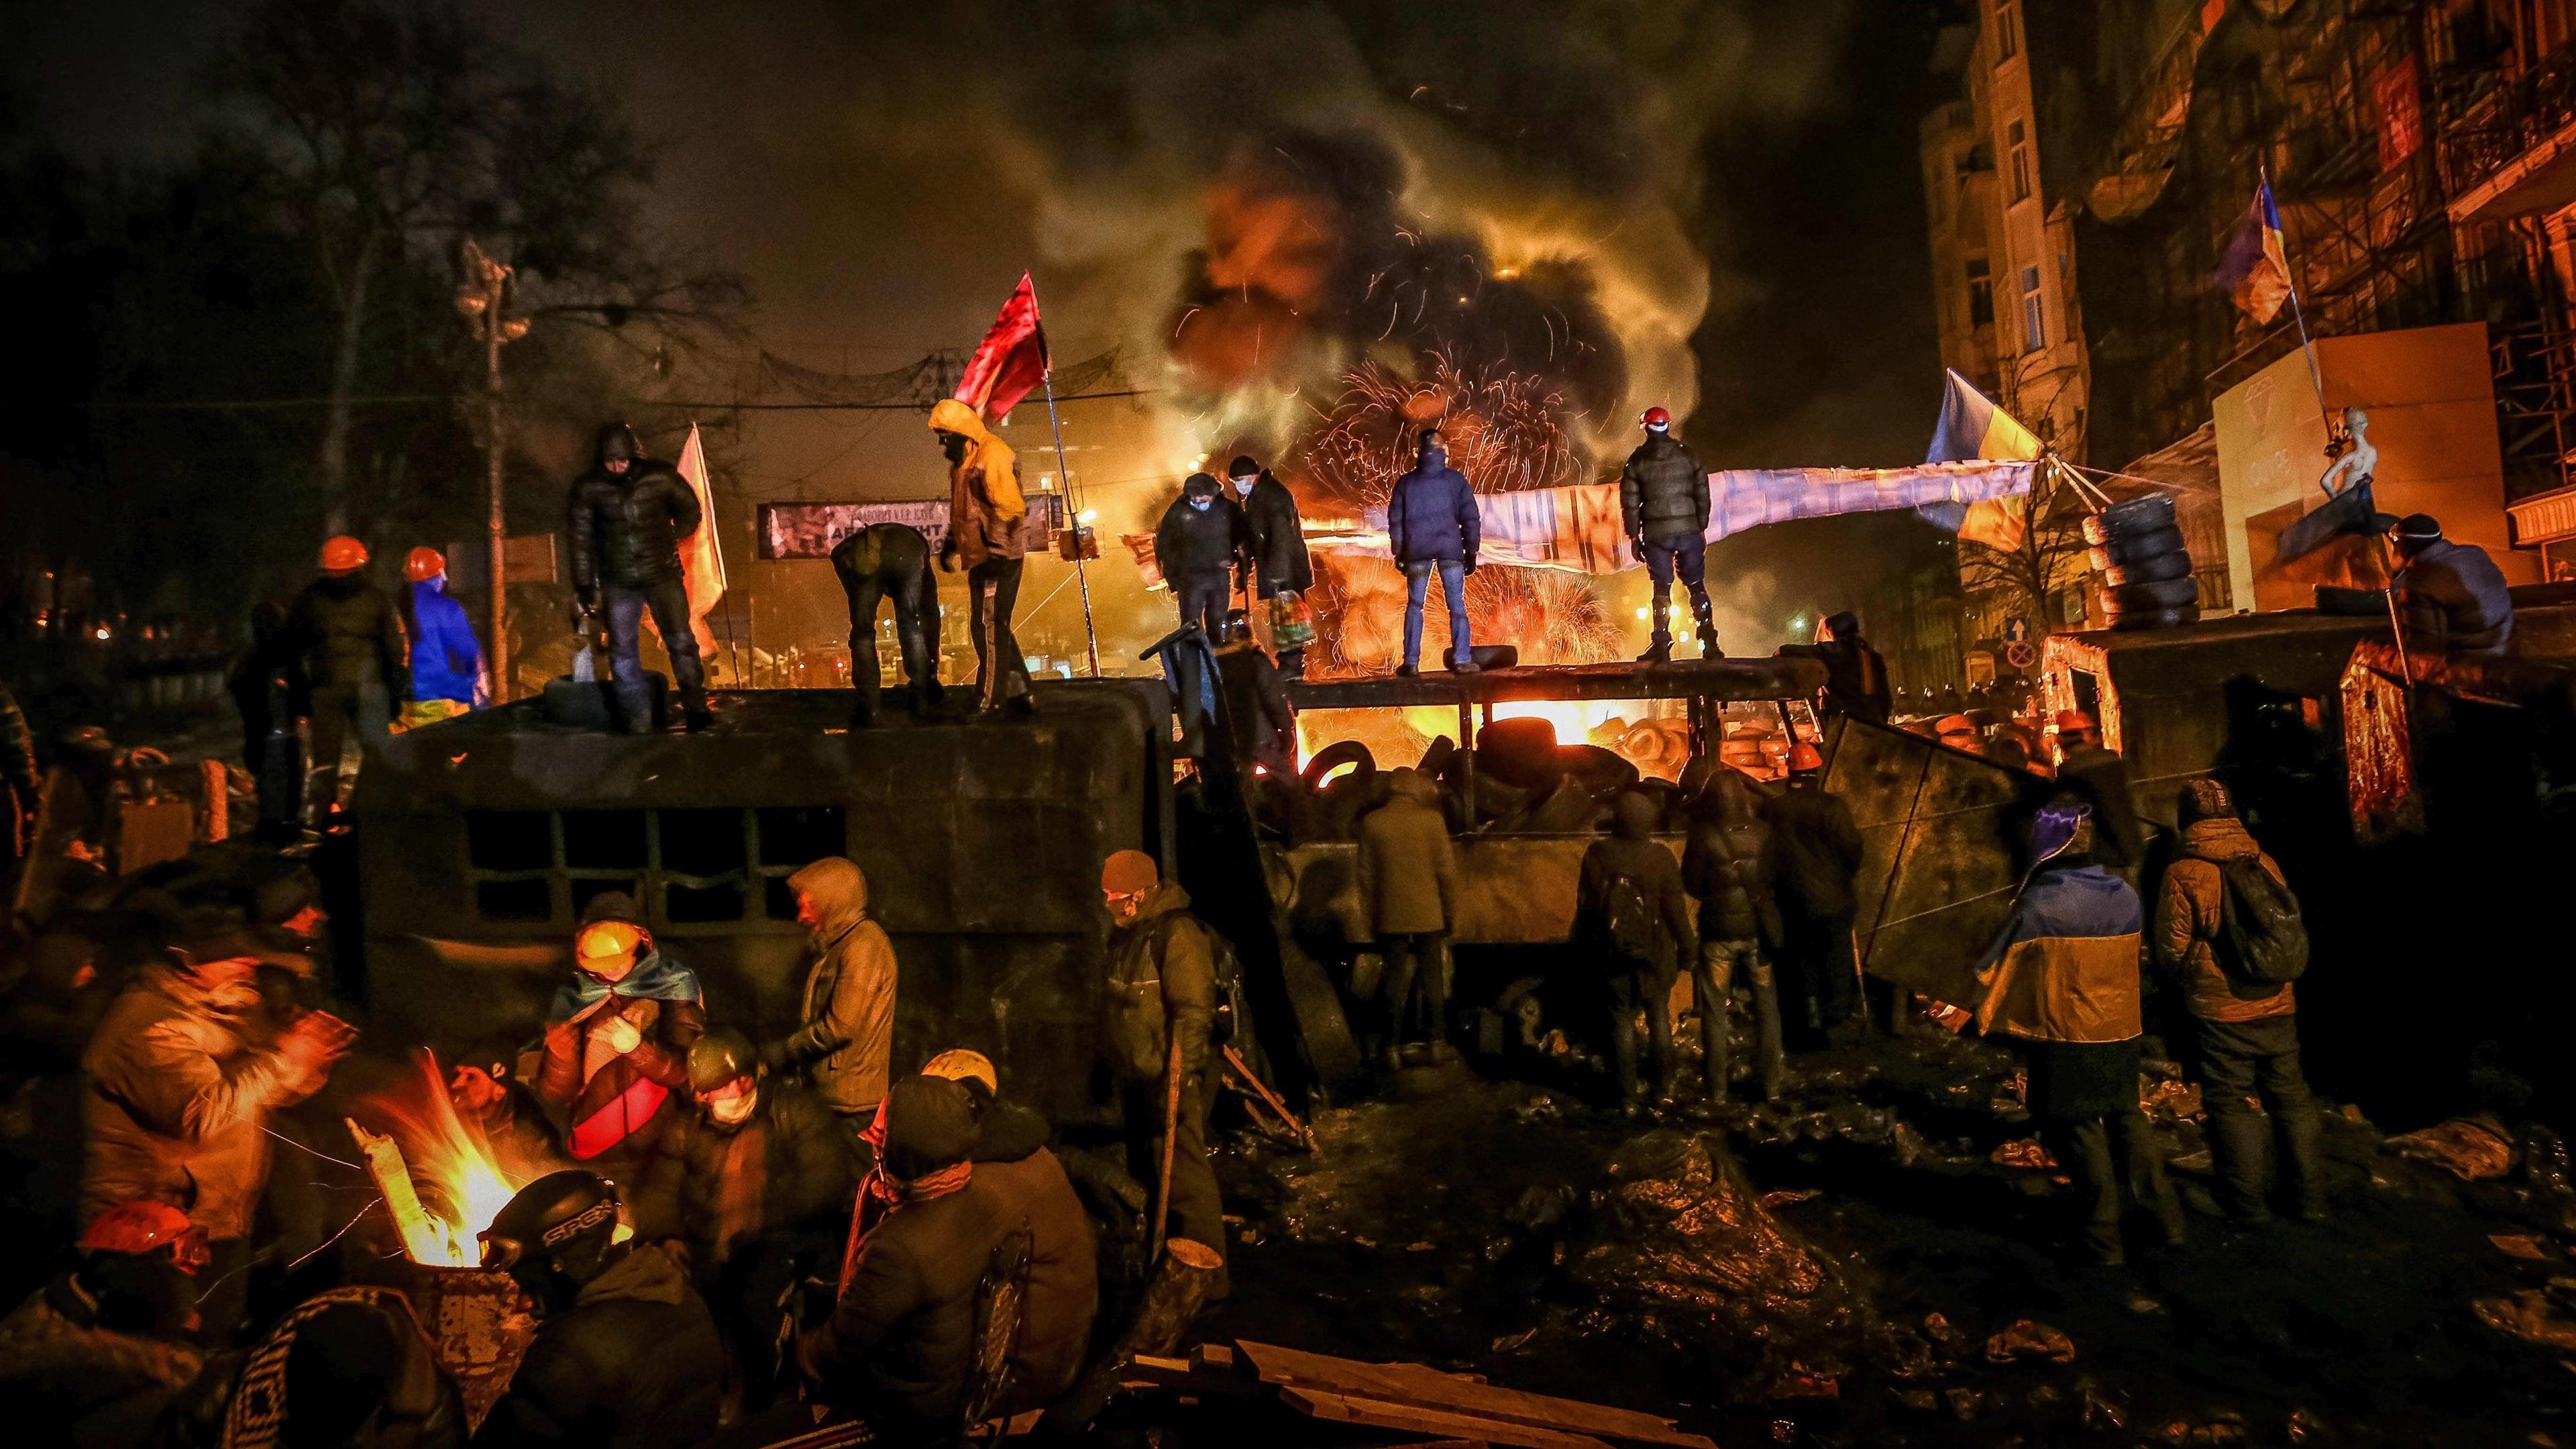 Winter on Fire: Ukraine's Fight for Freedom backdrop